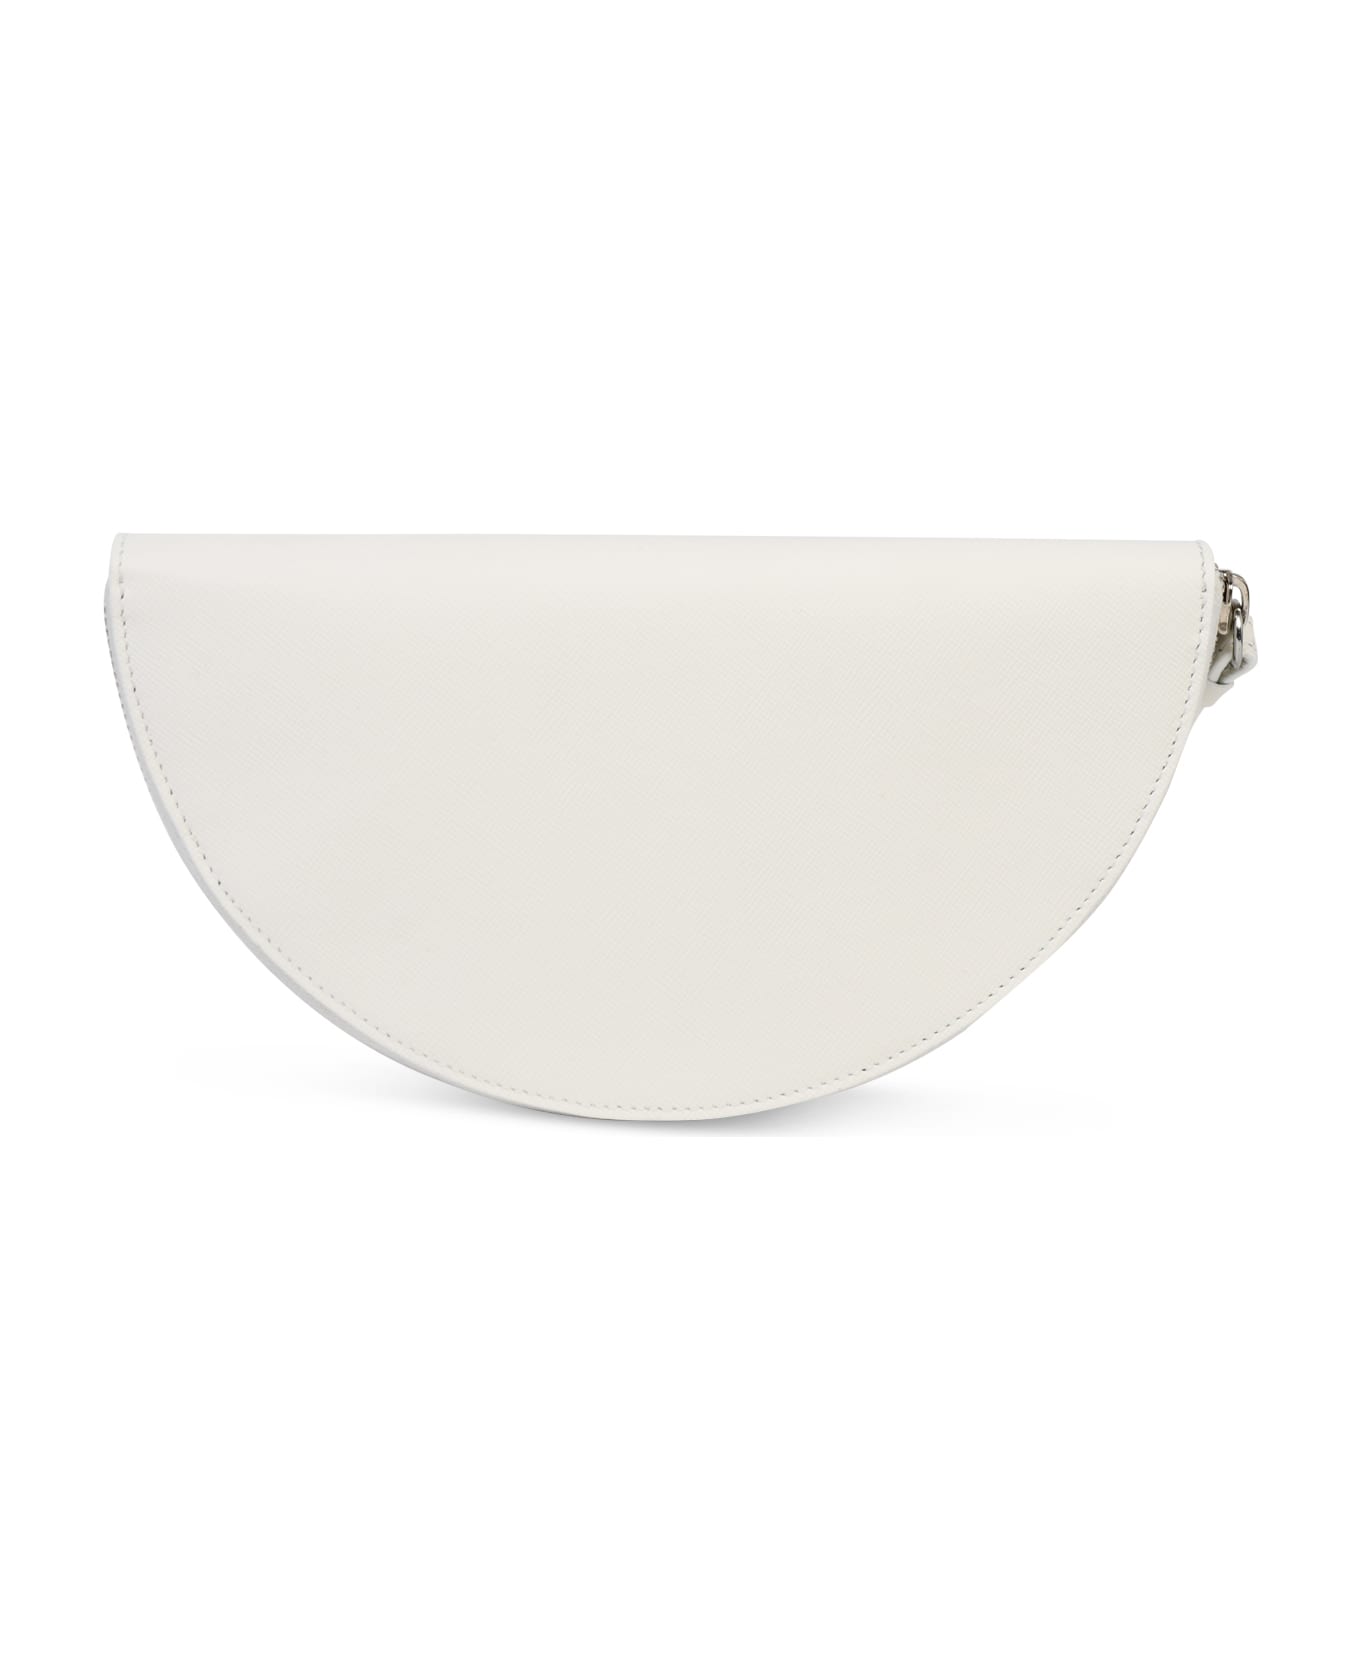 Maison Margiela White Saffiano Leather Clutch Bag - White トートバッグ